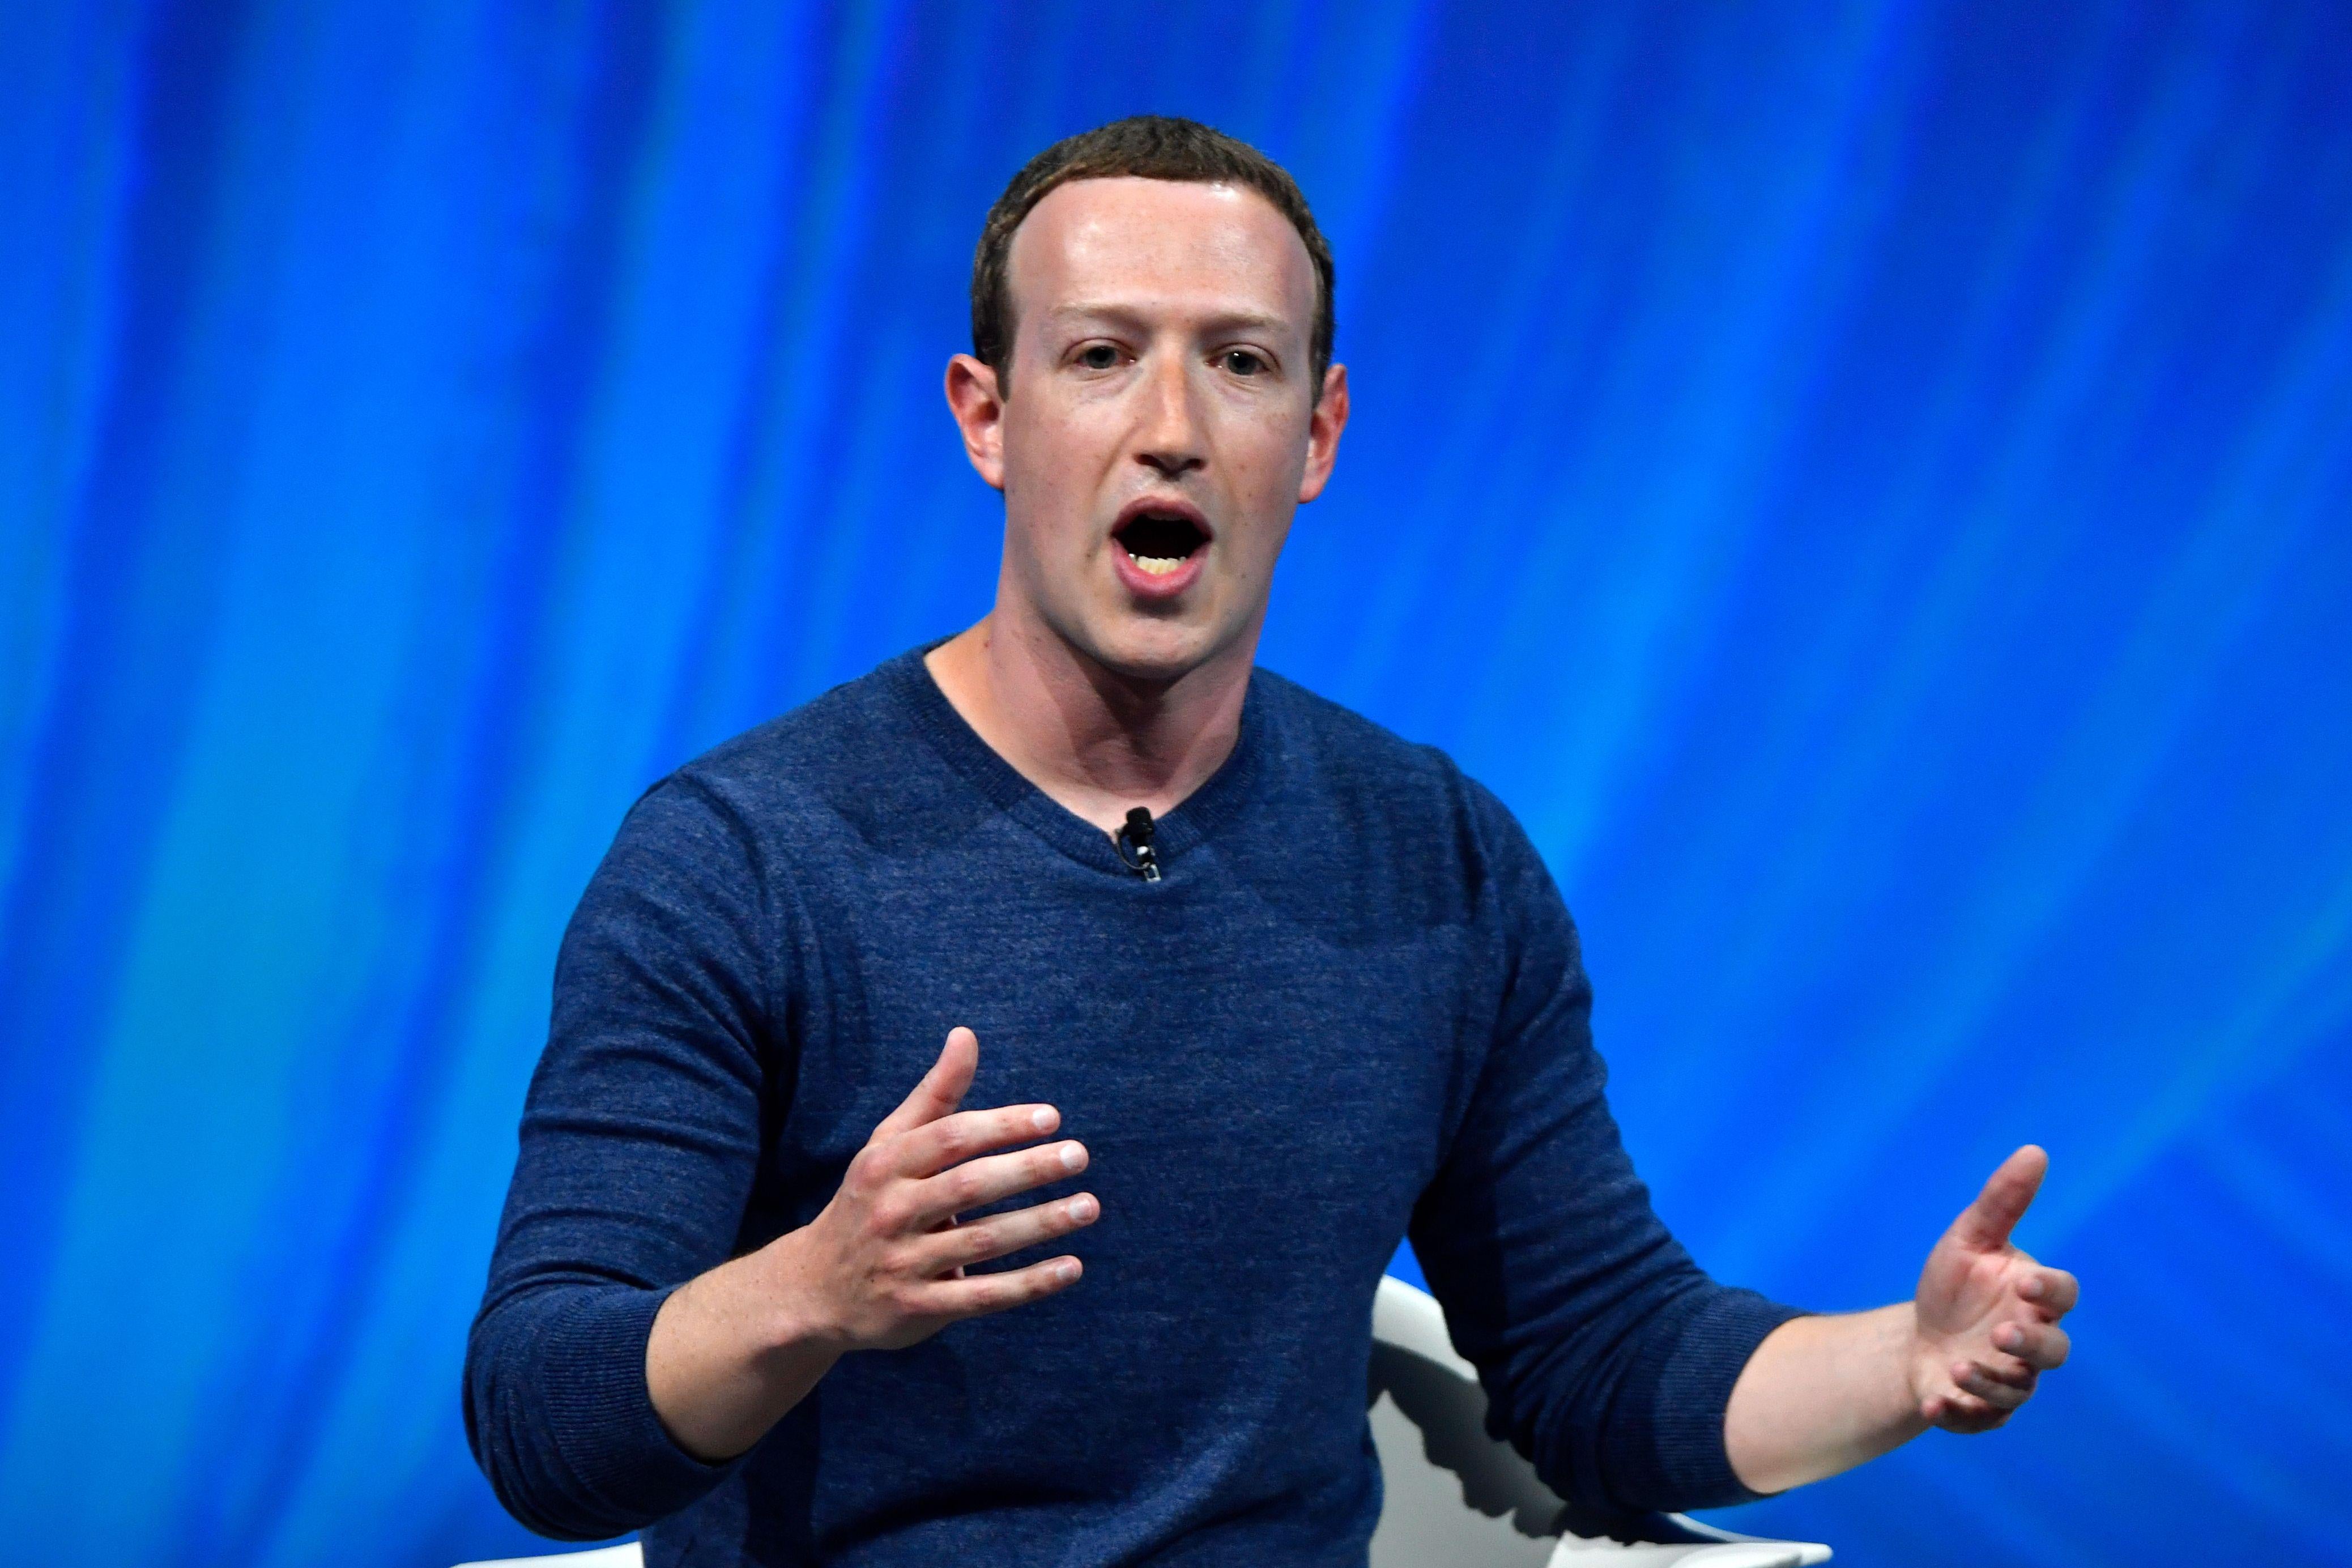 Mark Zuckerberg gestures while speaking at an event.